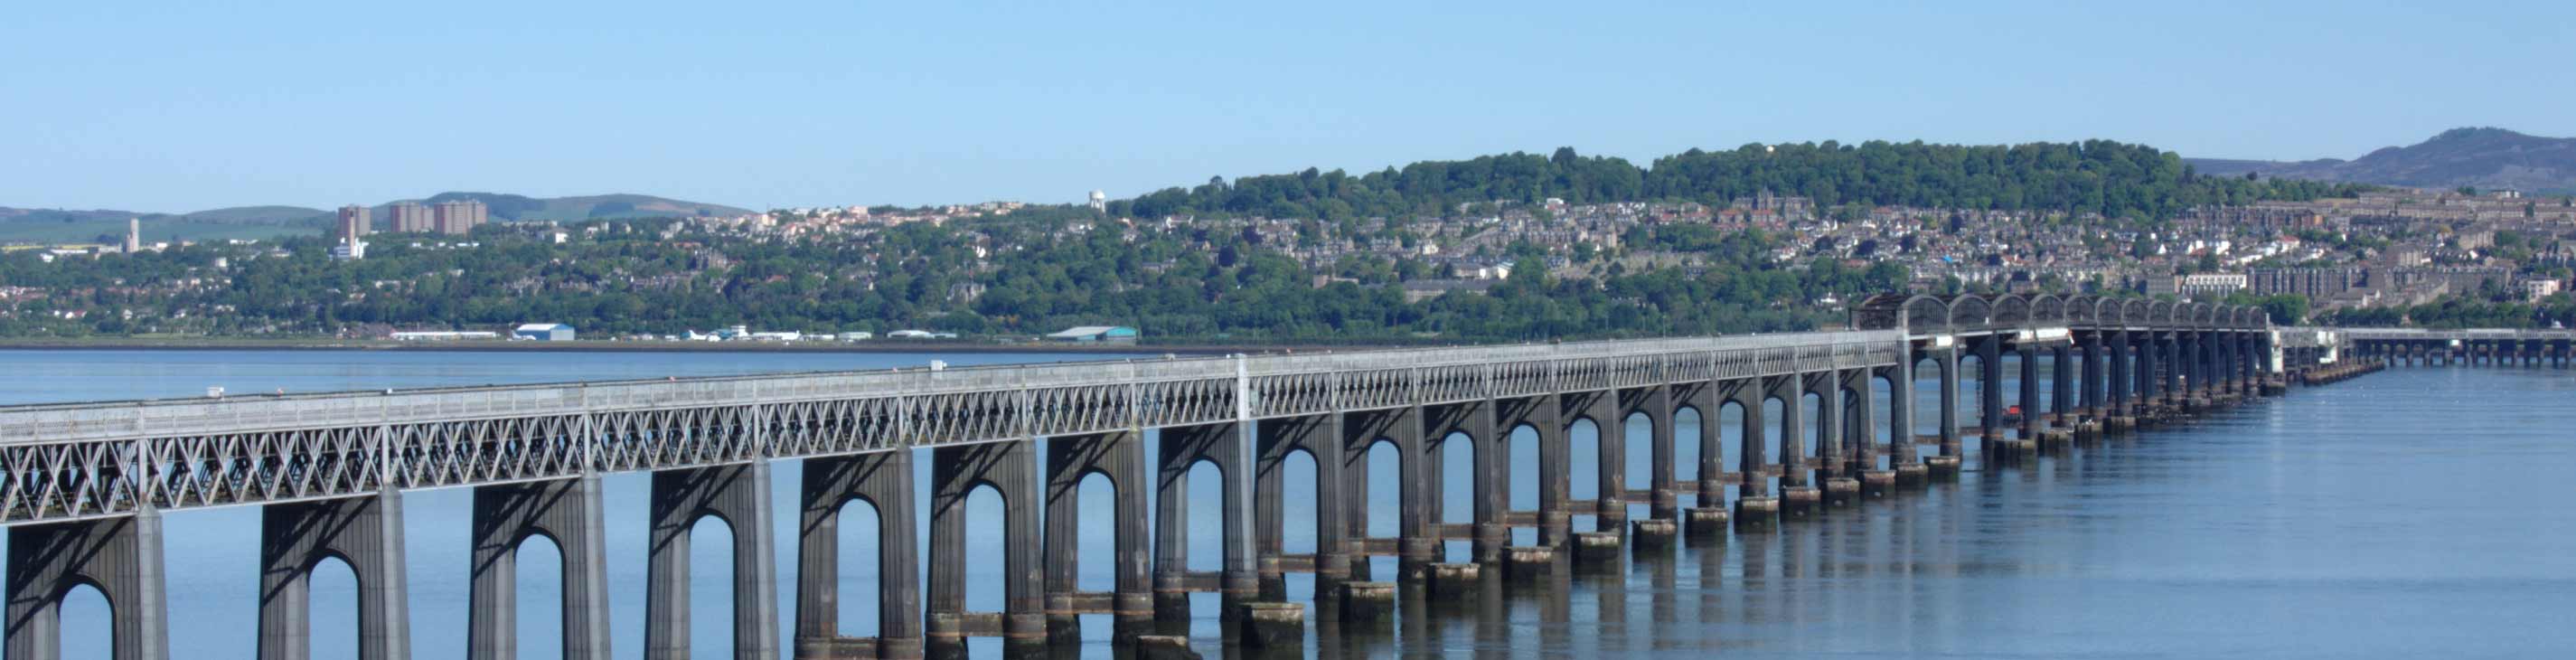 Dundee Tay Bridge